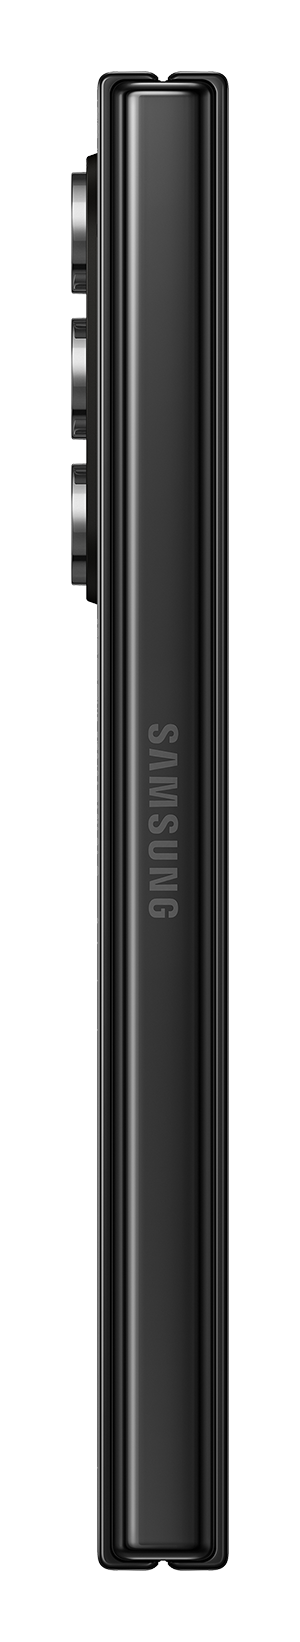 Samsung Fold5 5G black side